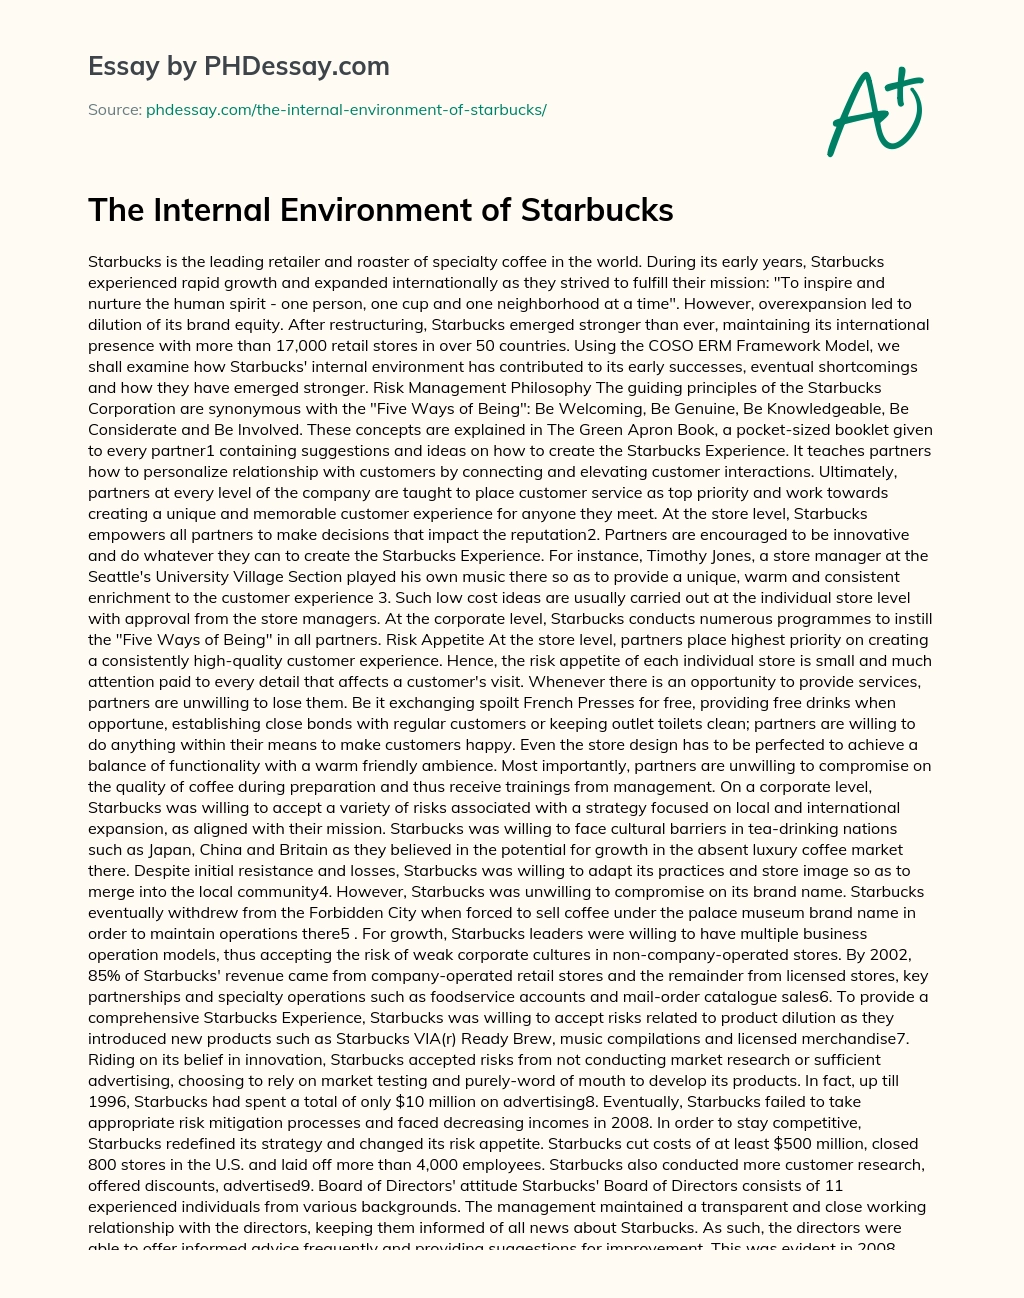 The Internal Environment of Starbucks essay